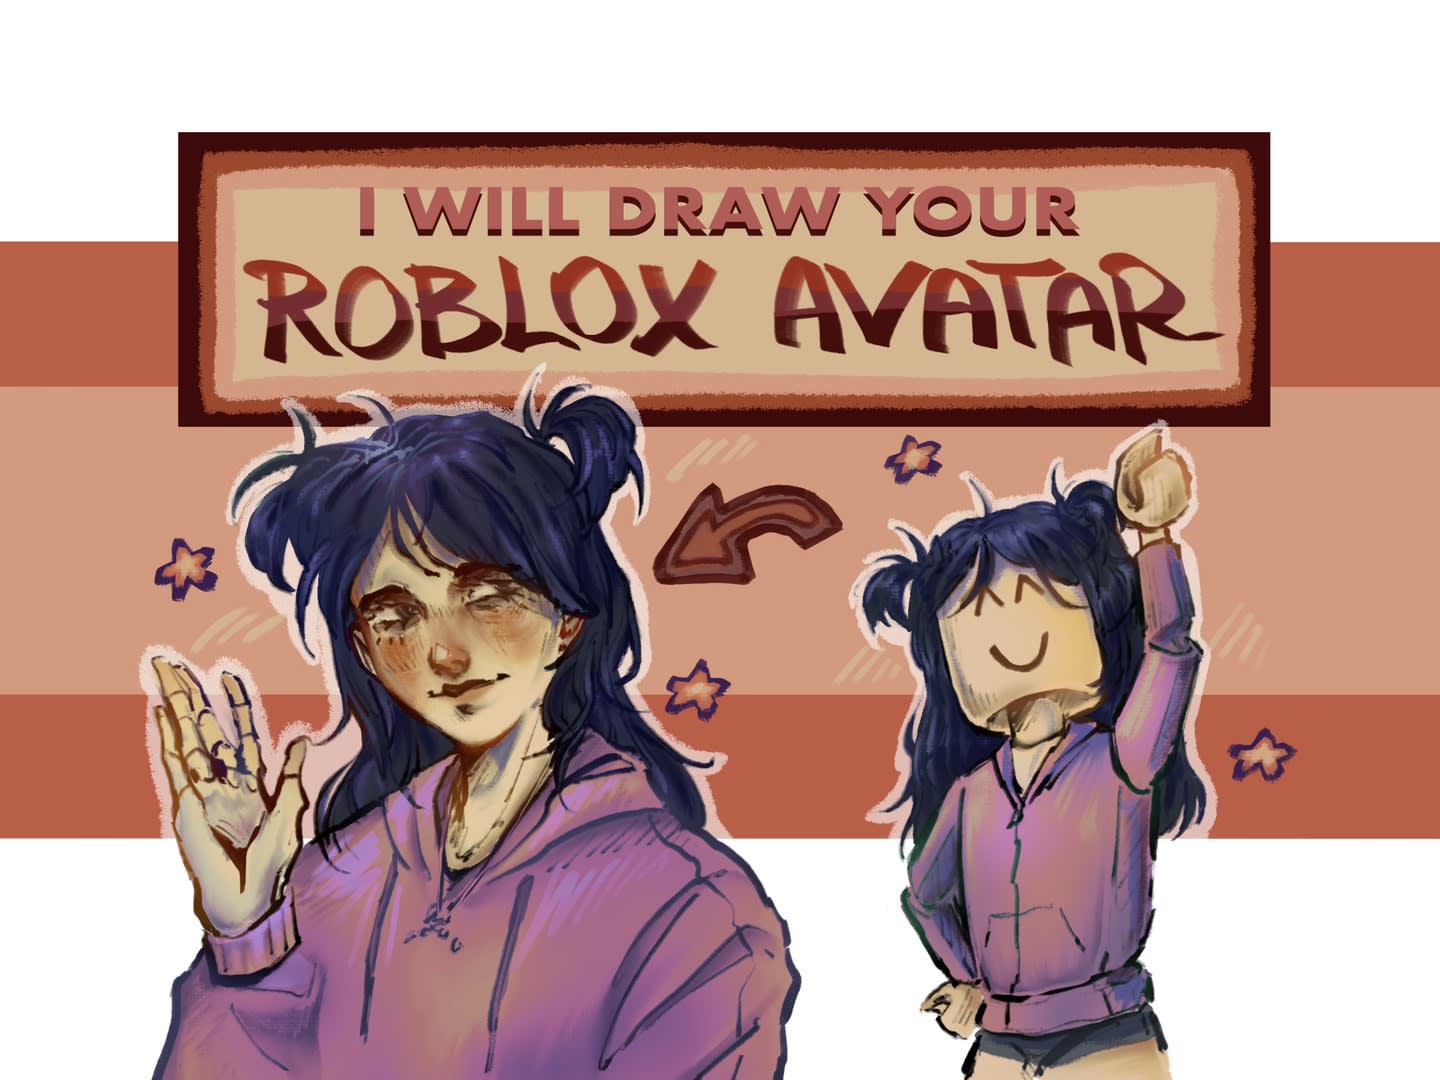 Create comics meme roblox avatar, roblox girl, skin roblox - Comics - Meme -arsenal.com